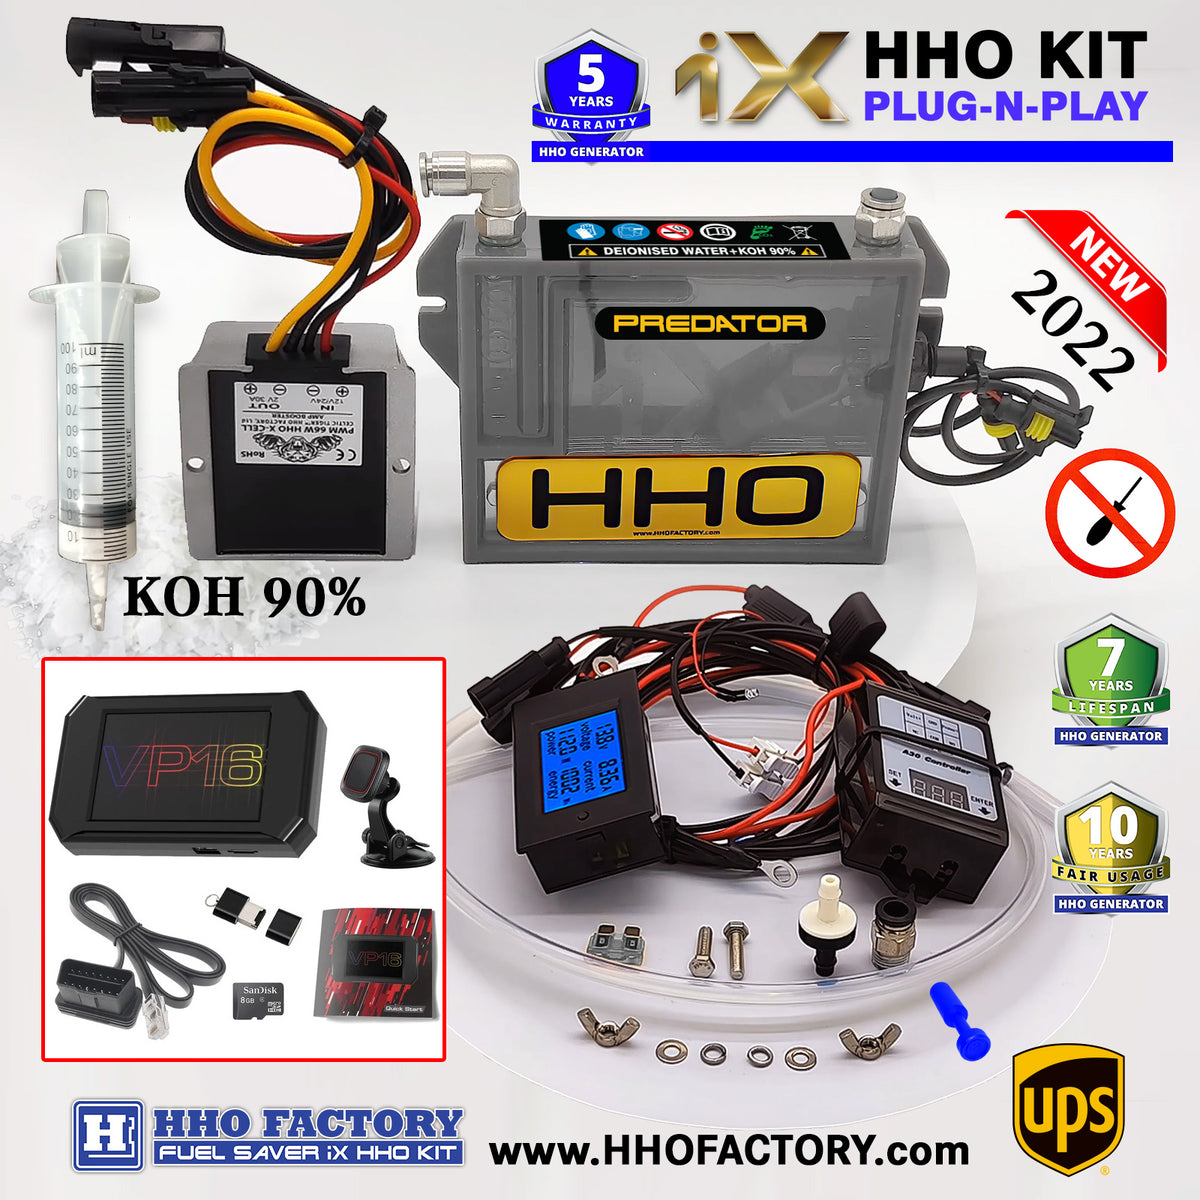 hydrogen generator kit/Hydrogen generator kit plug-n-play 47% fuel saving - HHO FACTORY, Ltd